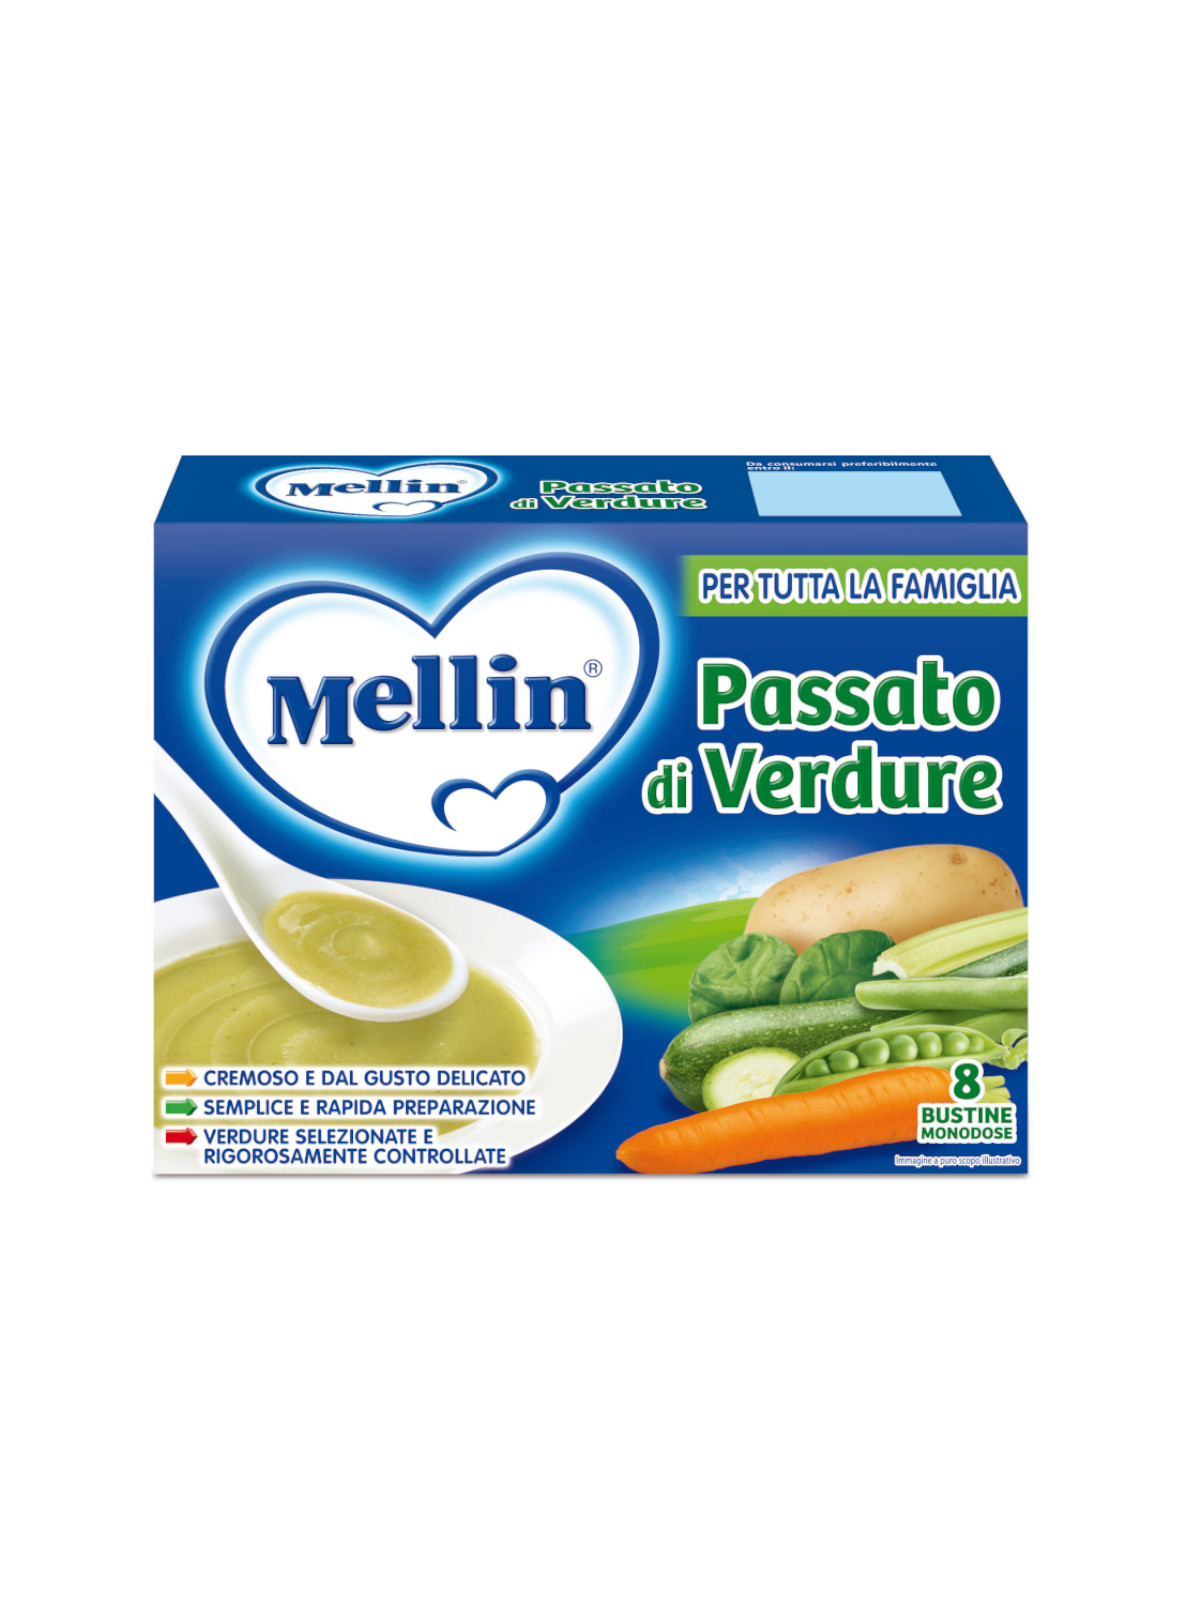 Mellin passato di verdura 8x13 gr - Mellin